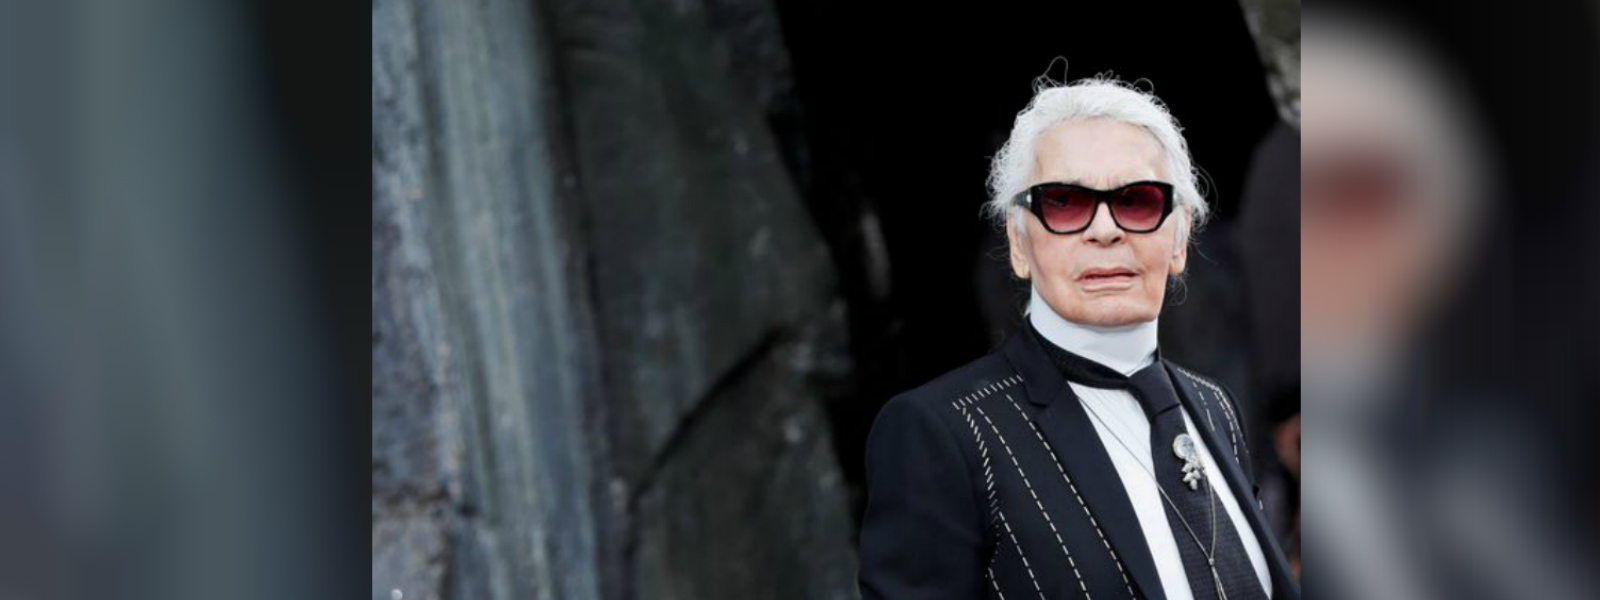 Fashion icon Karl Lagerfeld dies aged 85